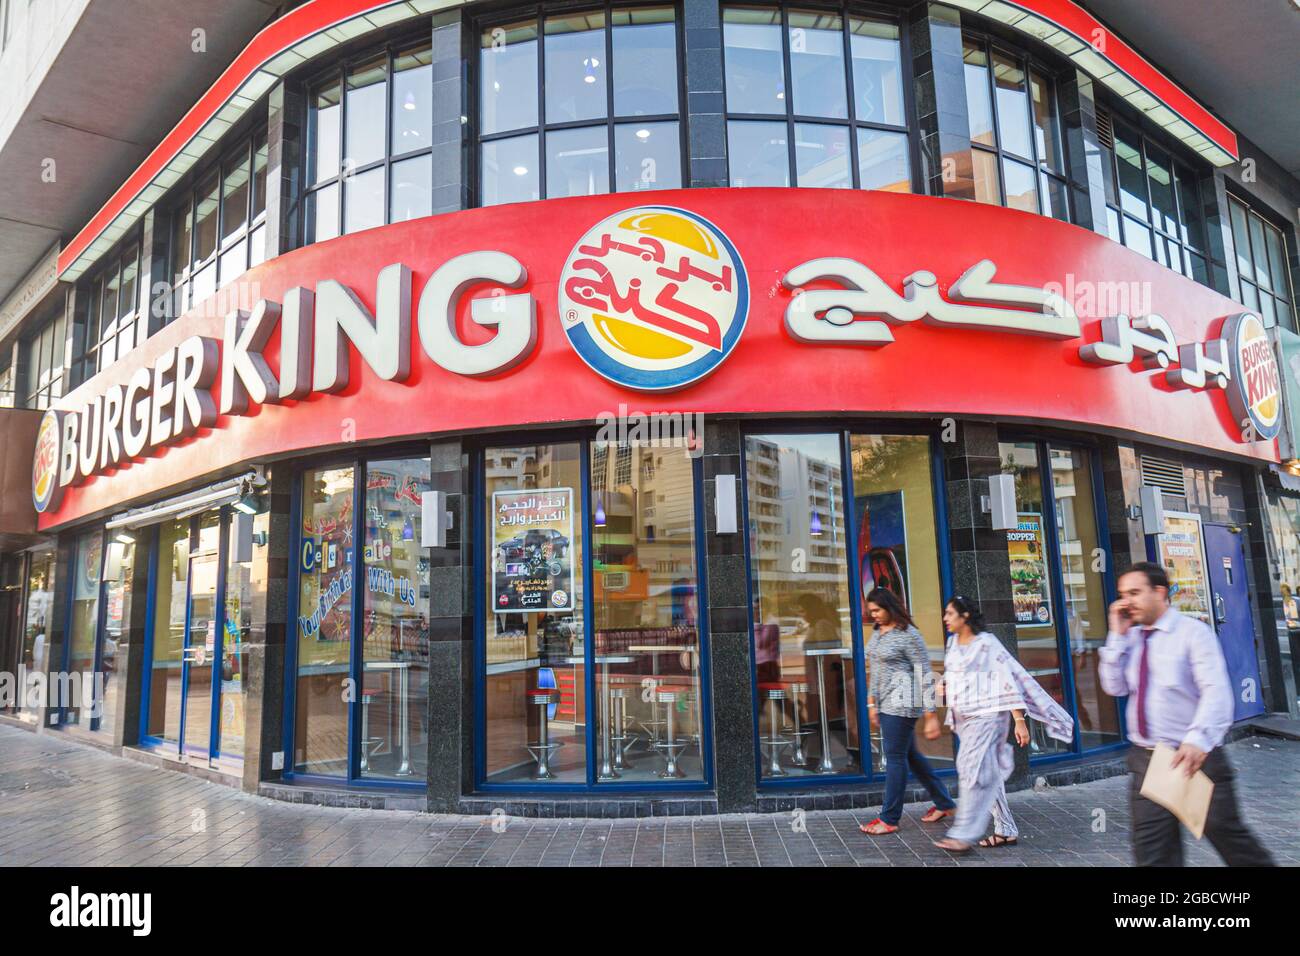 Emirati Arabi Uniti UAE Dubai Deira al Rigga Road, inglese arabo bilingue Burger King fast food, Foto Stock